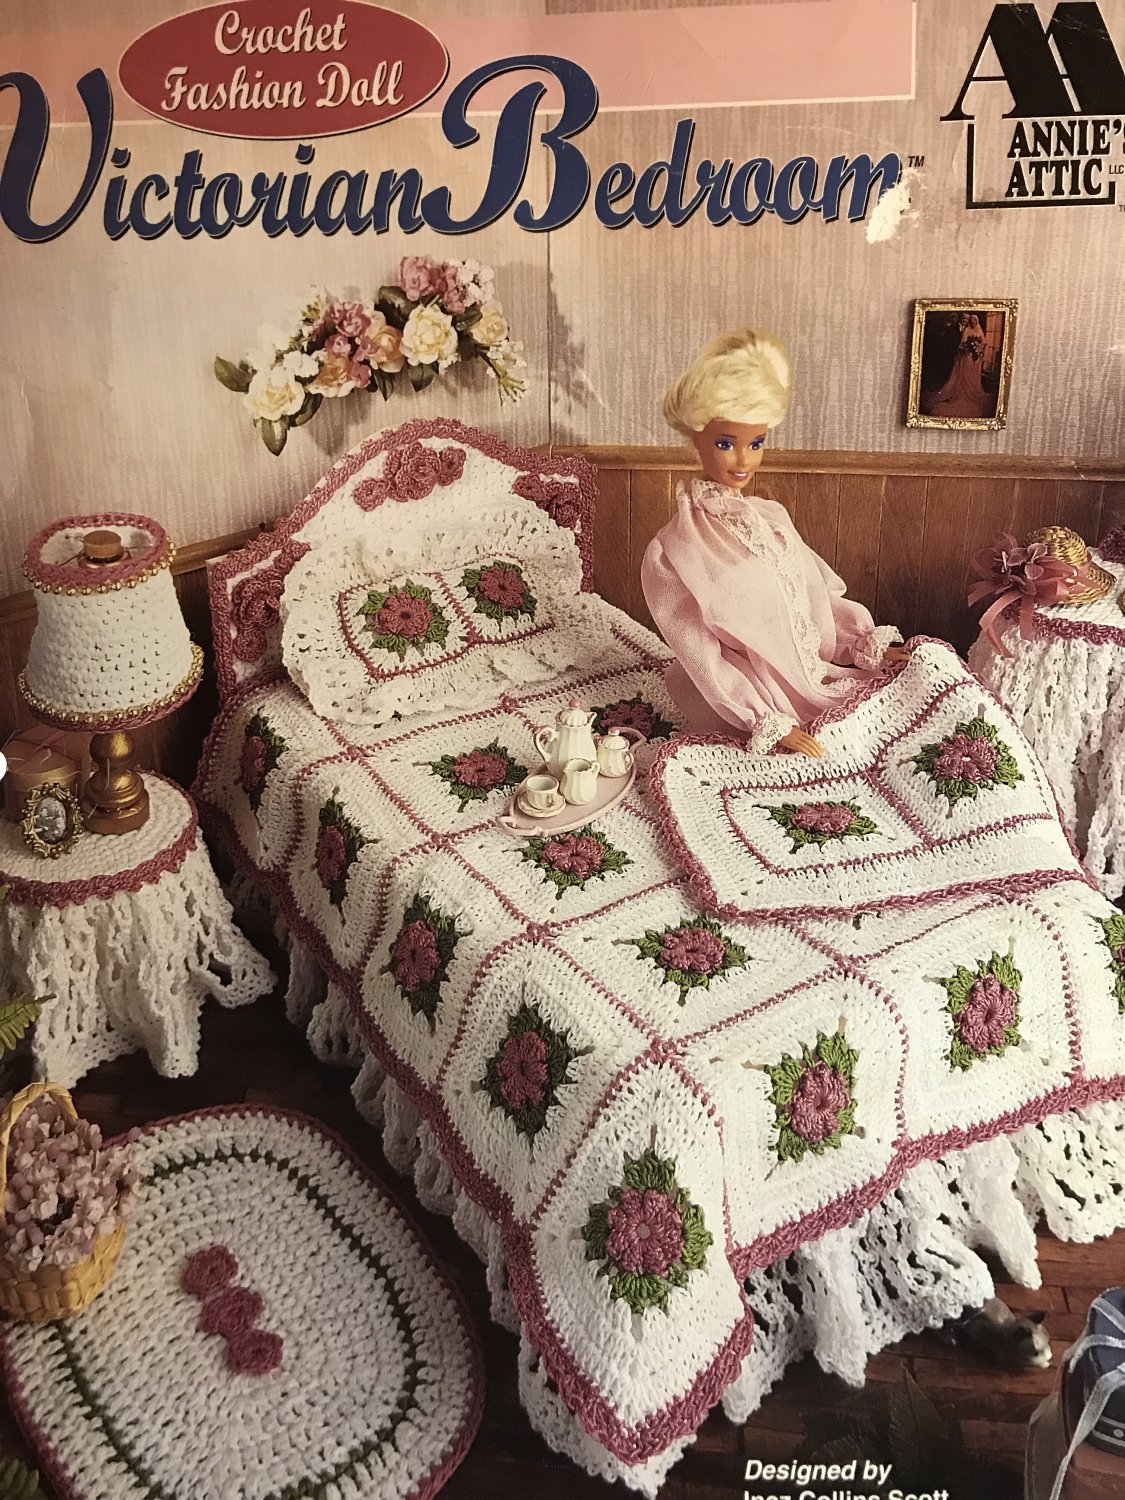 Victorian Bedroom Annie 's Attic Crochet Fashion Doll Furniture Pattern Booklet 879602